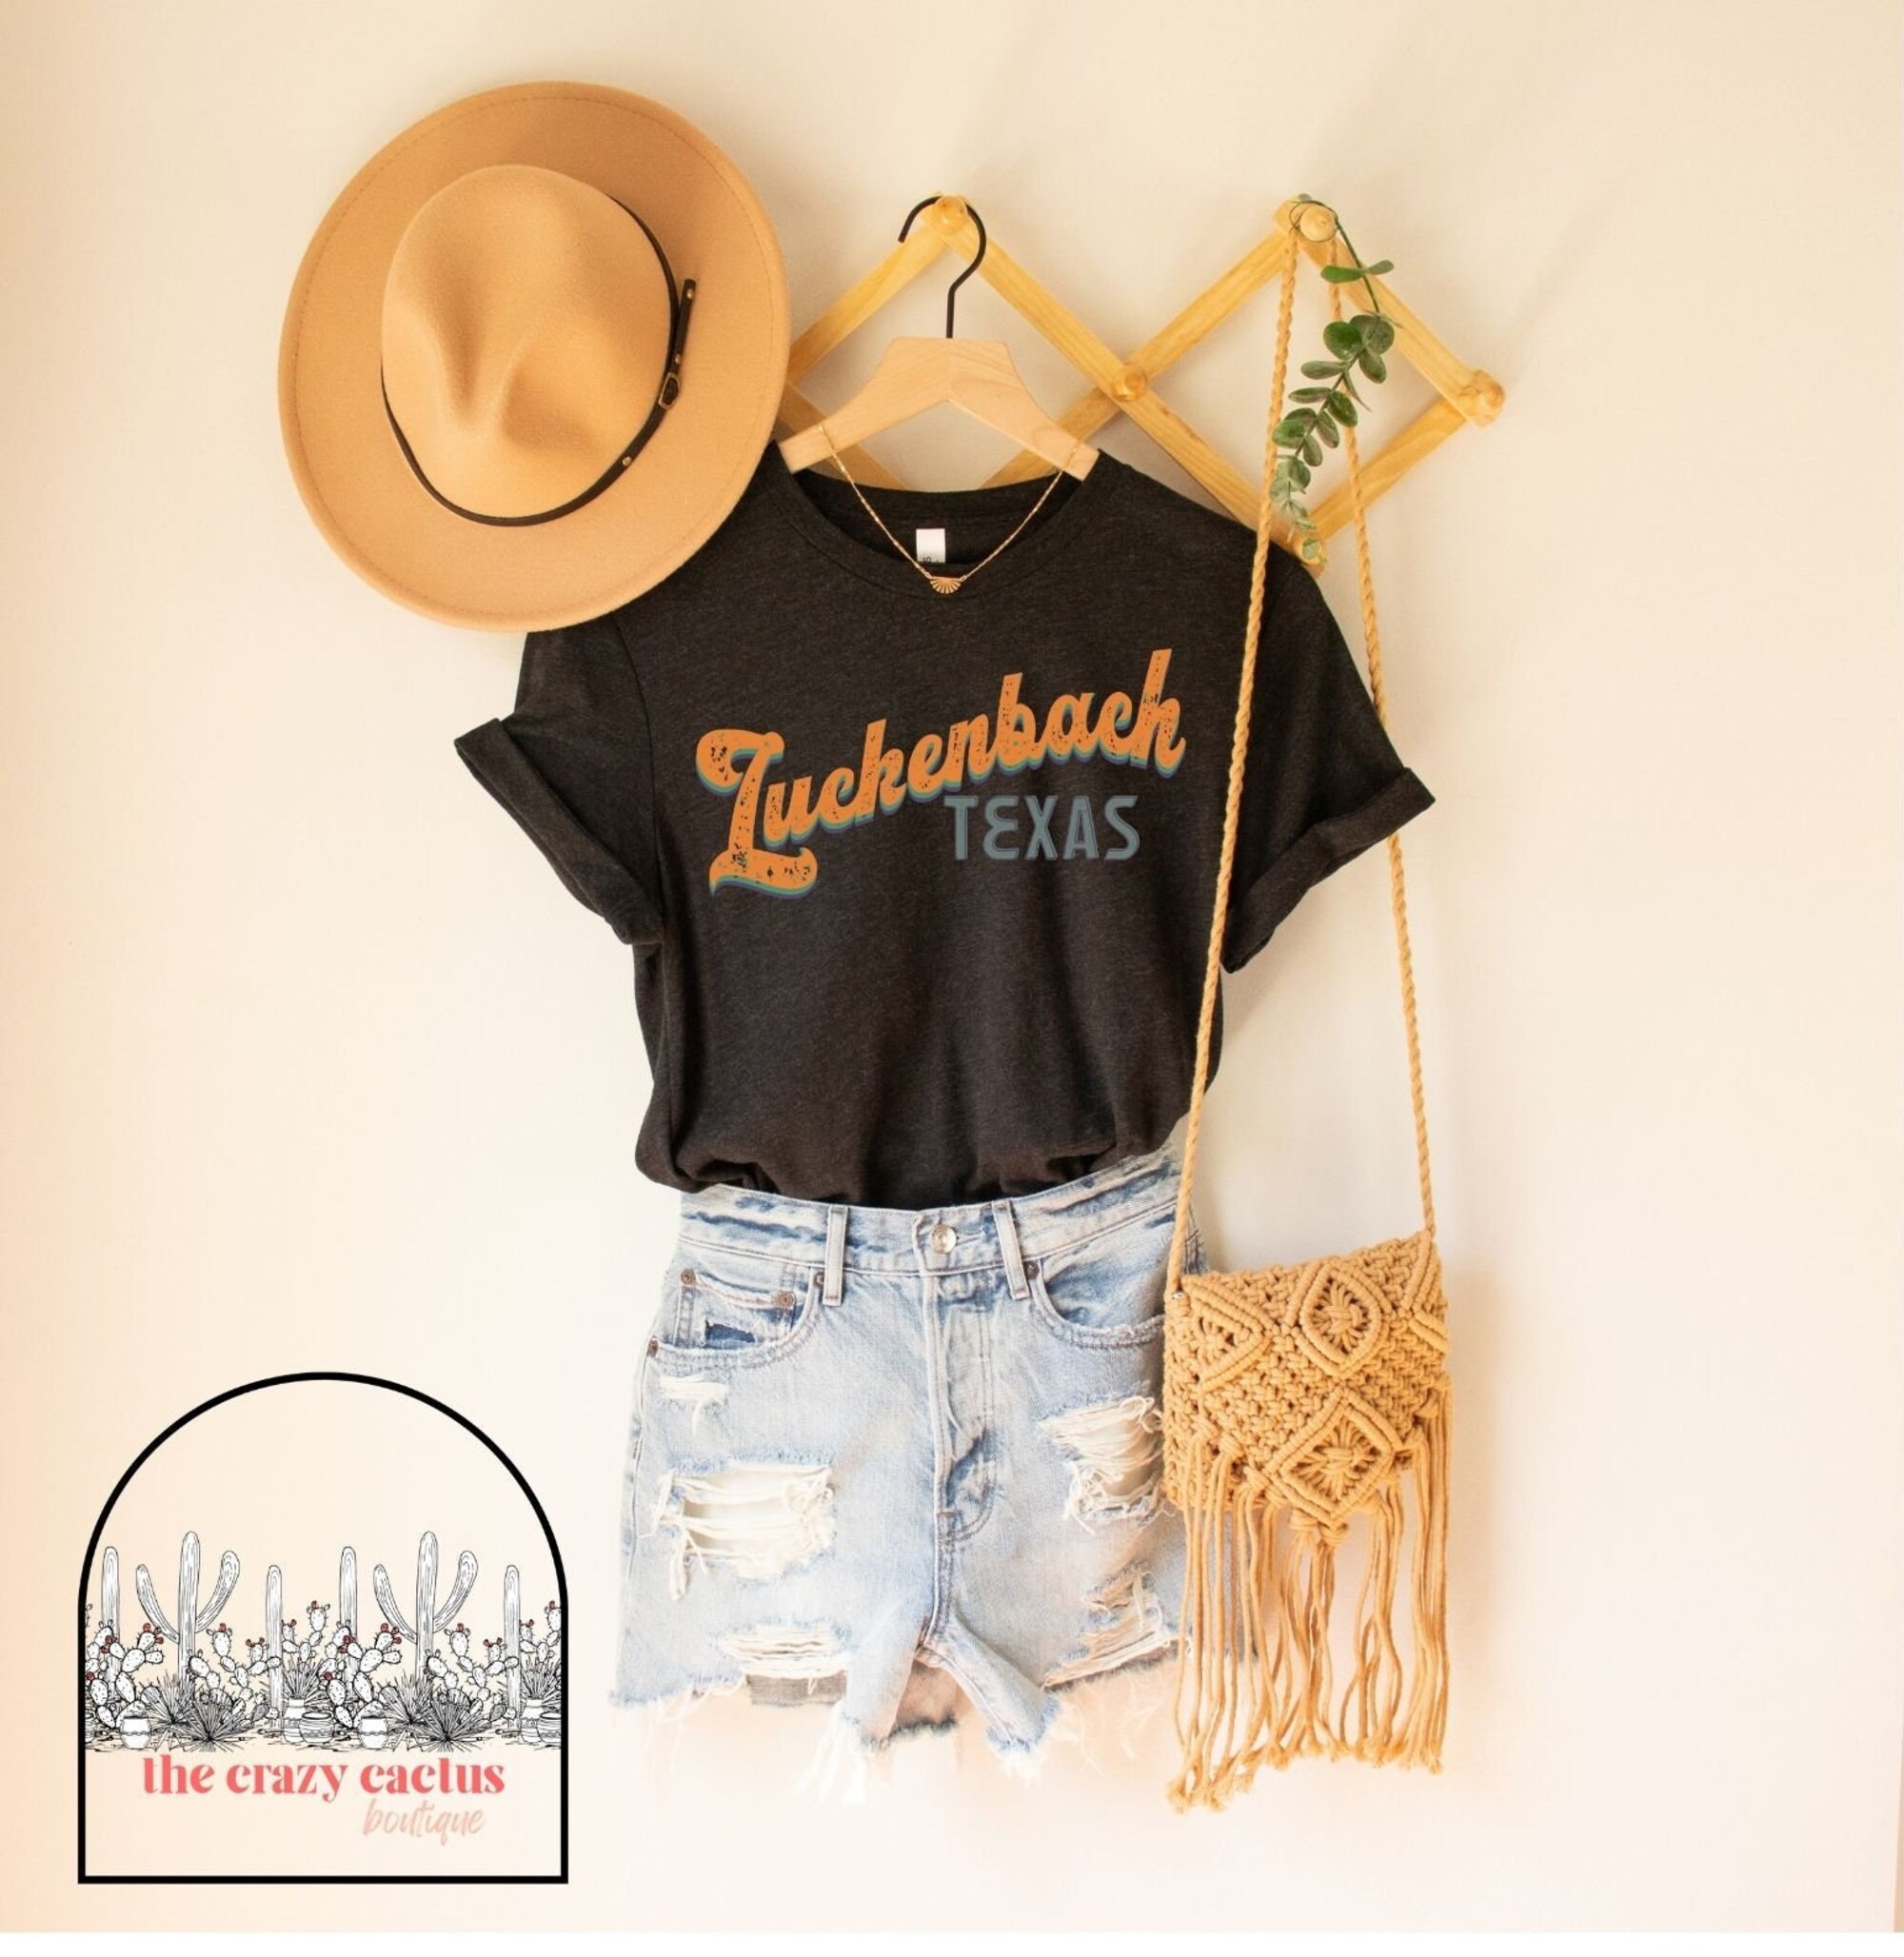 Discover Luckenbach, Texas Shirt, Mens T-shirts, Women's T-shirts, Gifts for Men Women, Waylon Jennings, Classic Country, Concert tee, Festival shirt